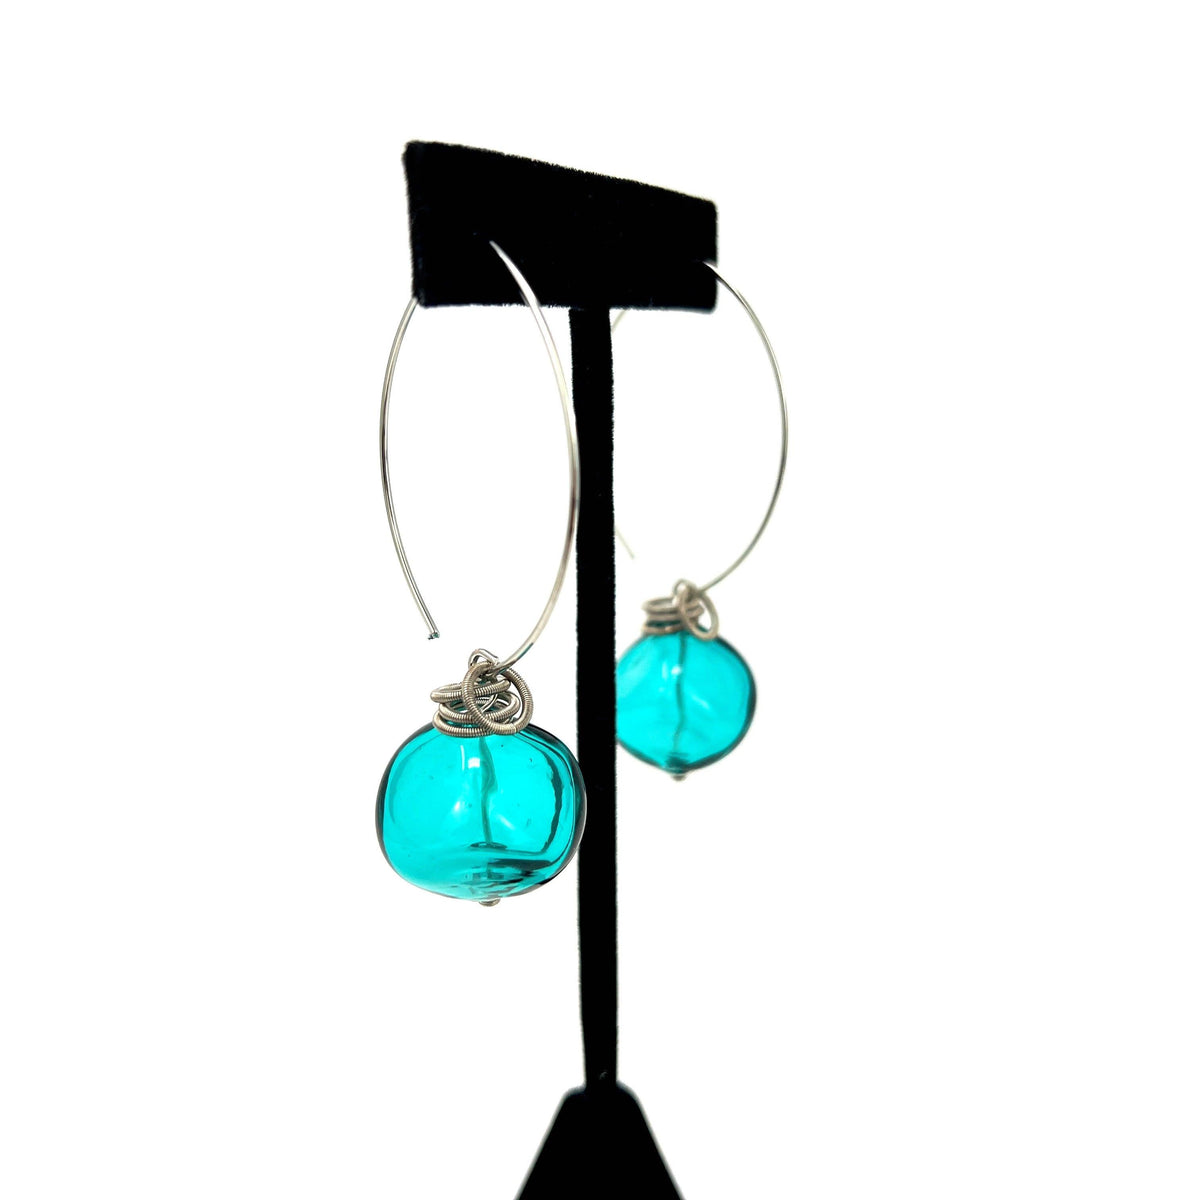 Boop Earrings, Murano Glass Bead and Hoop at MyItalianDecor